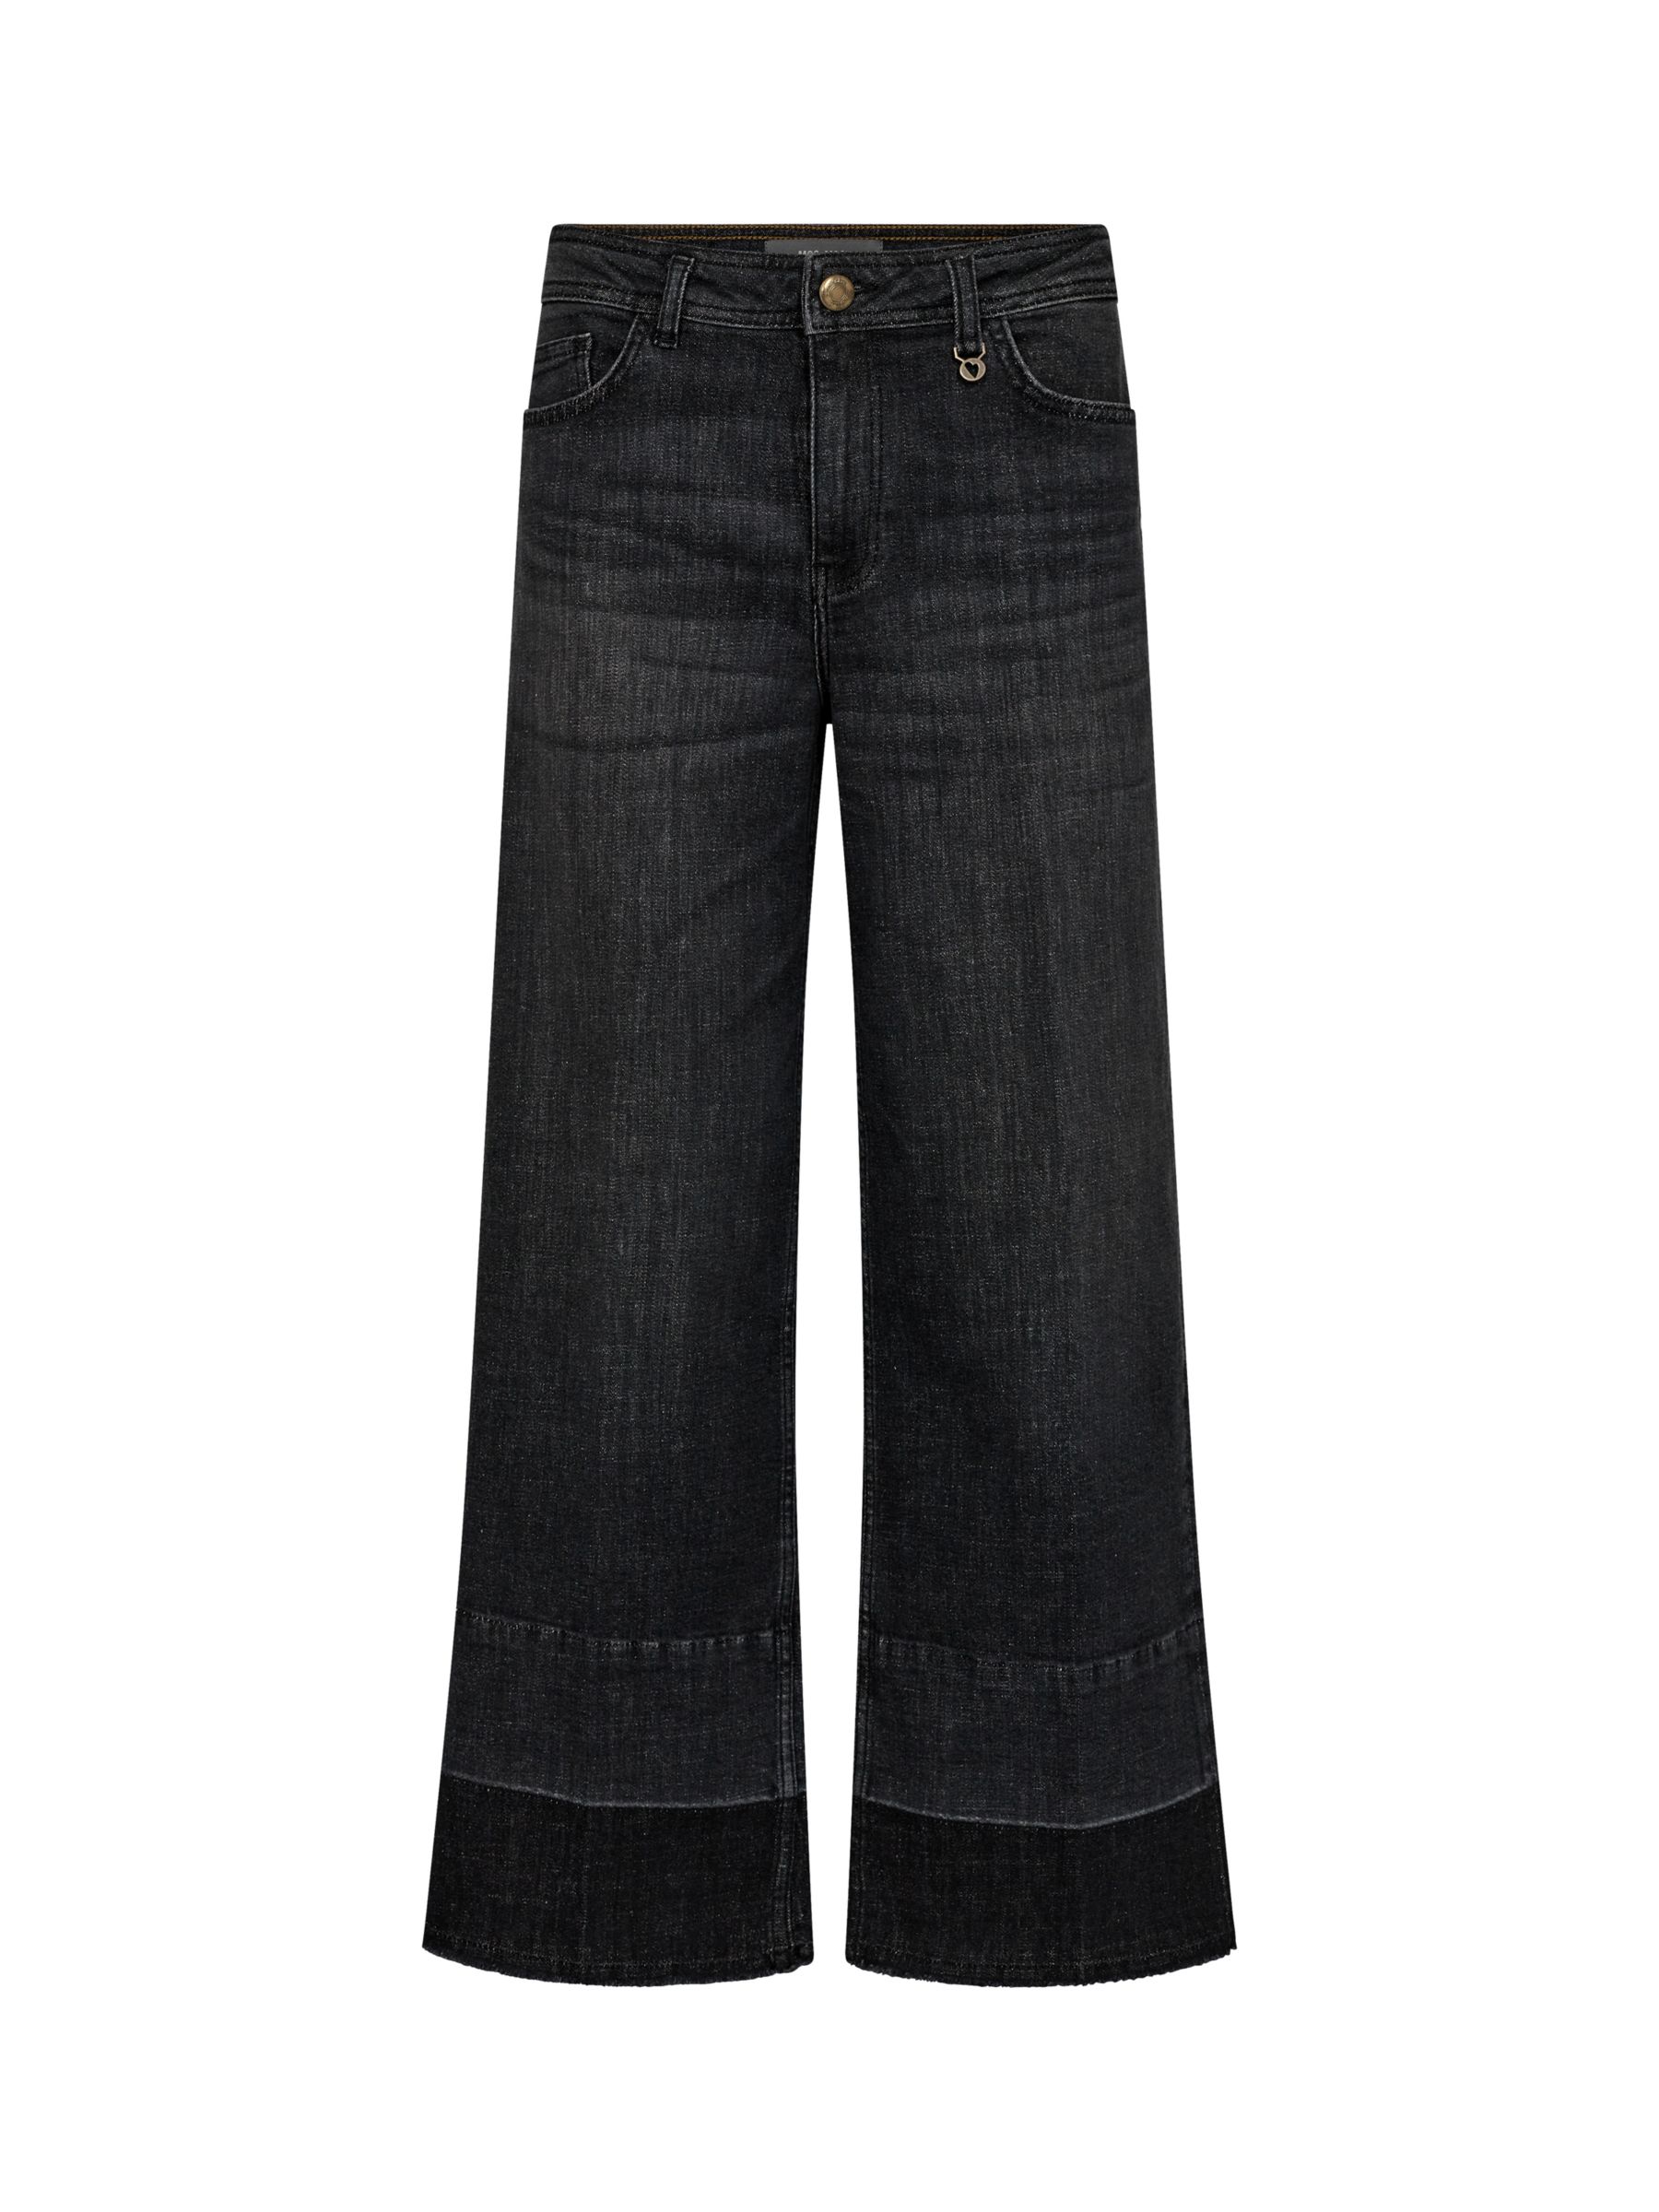 MOS MOSH Dara Wide Leg Mid Rise Jeans, Black, 27R